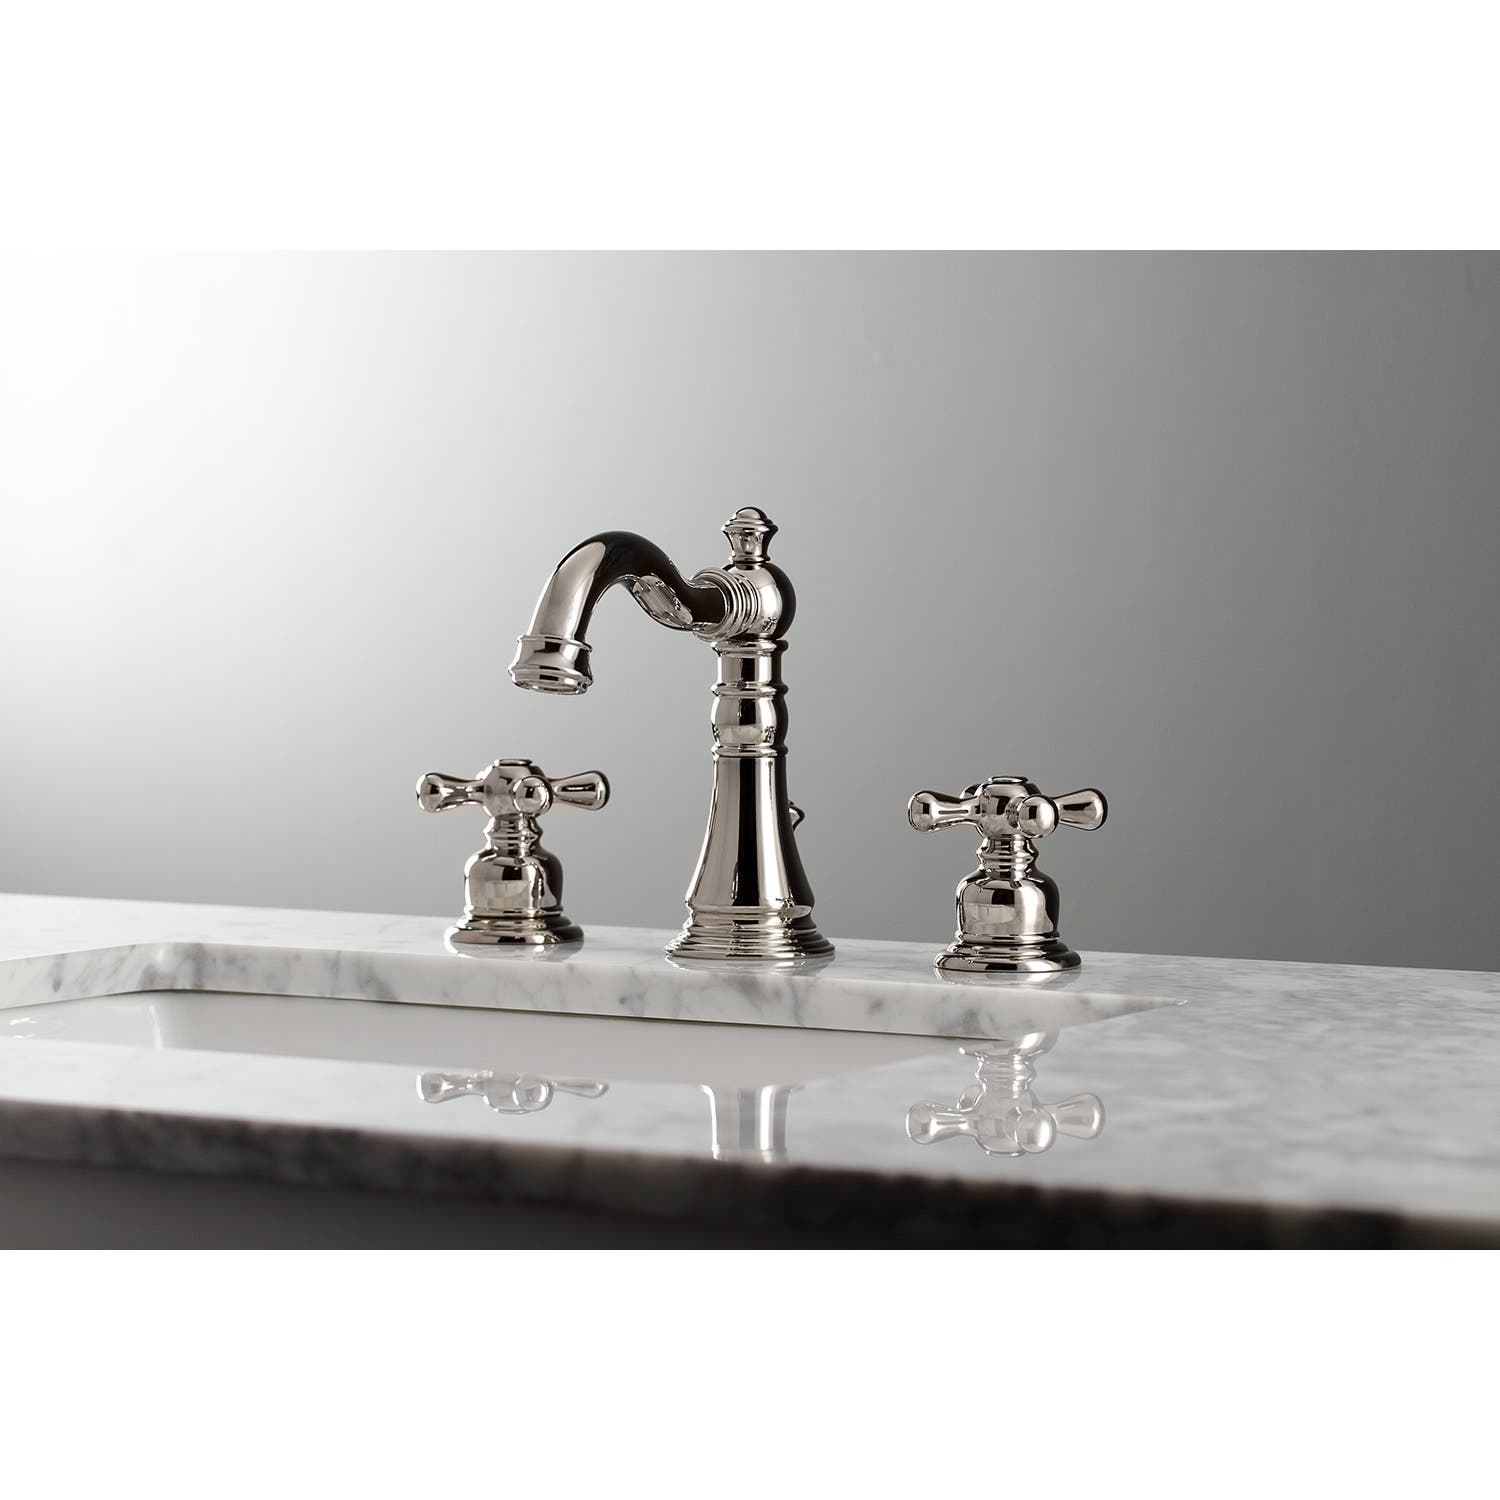 Polished Nickel Widespread Bathroom Faucet Feature: FSC1979AX